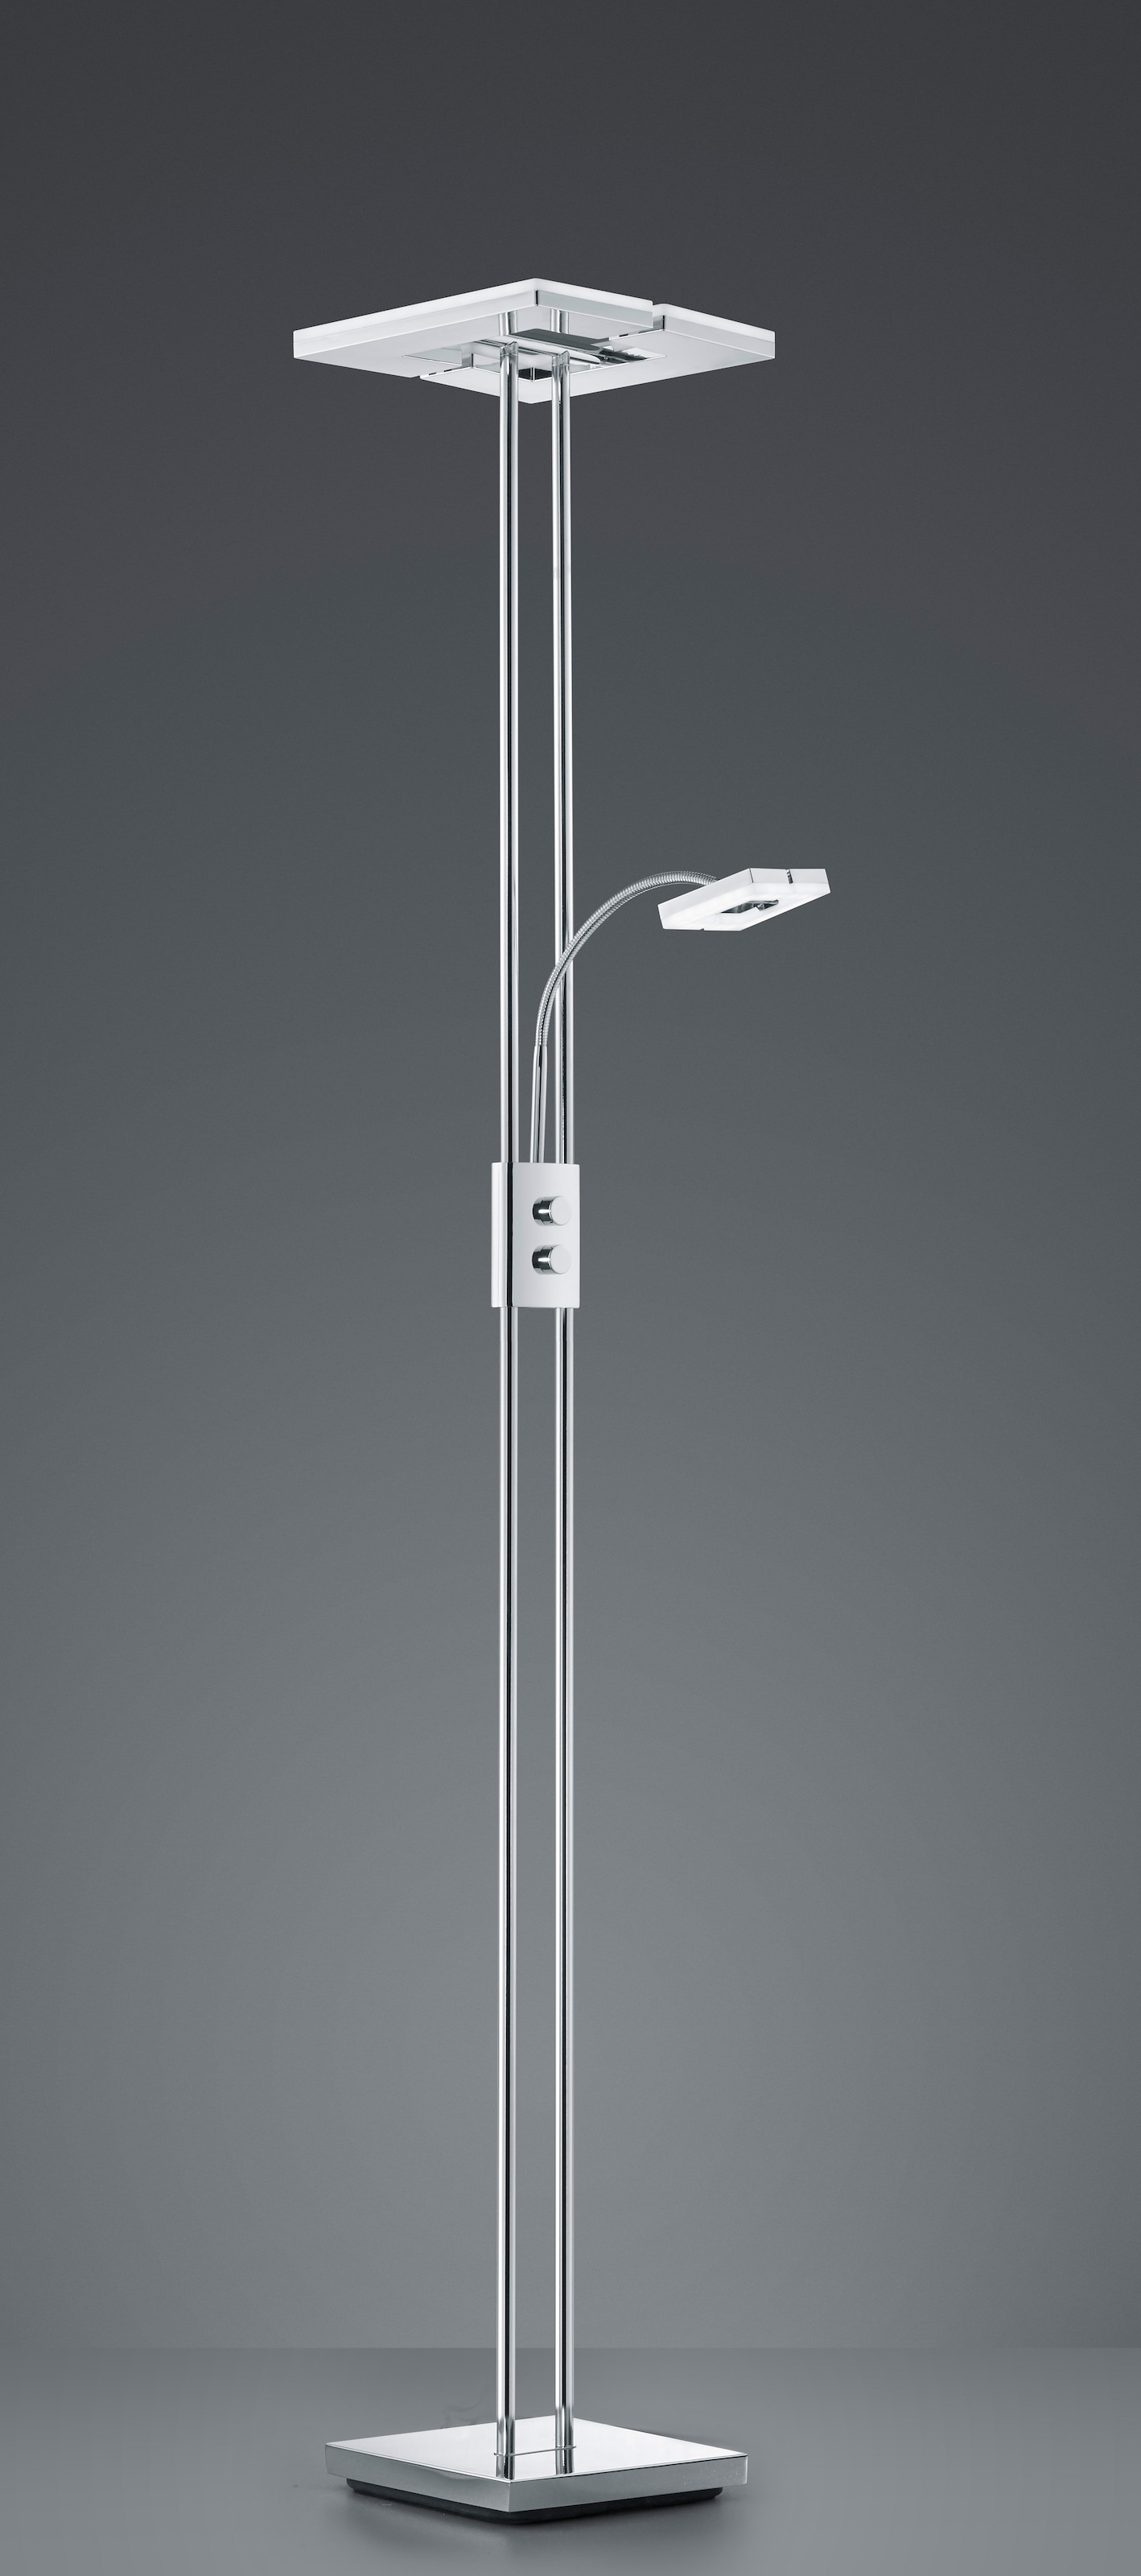 Lesearm, kippbar Fluterschirm LED 1 LED getrennt Leuchten mit Fluter BAUR TRIO flammig-flammig, | Stehlampe »Avignon«, dimmbarer